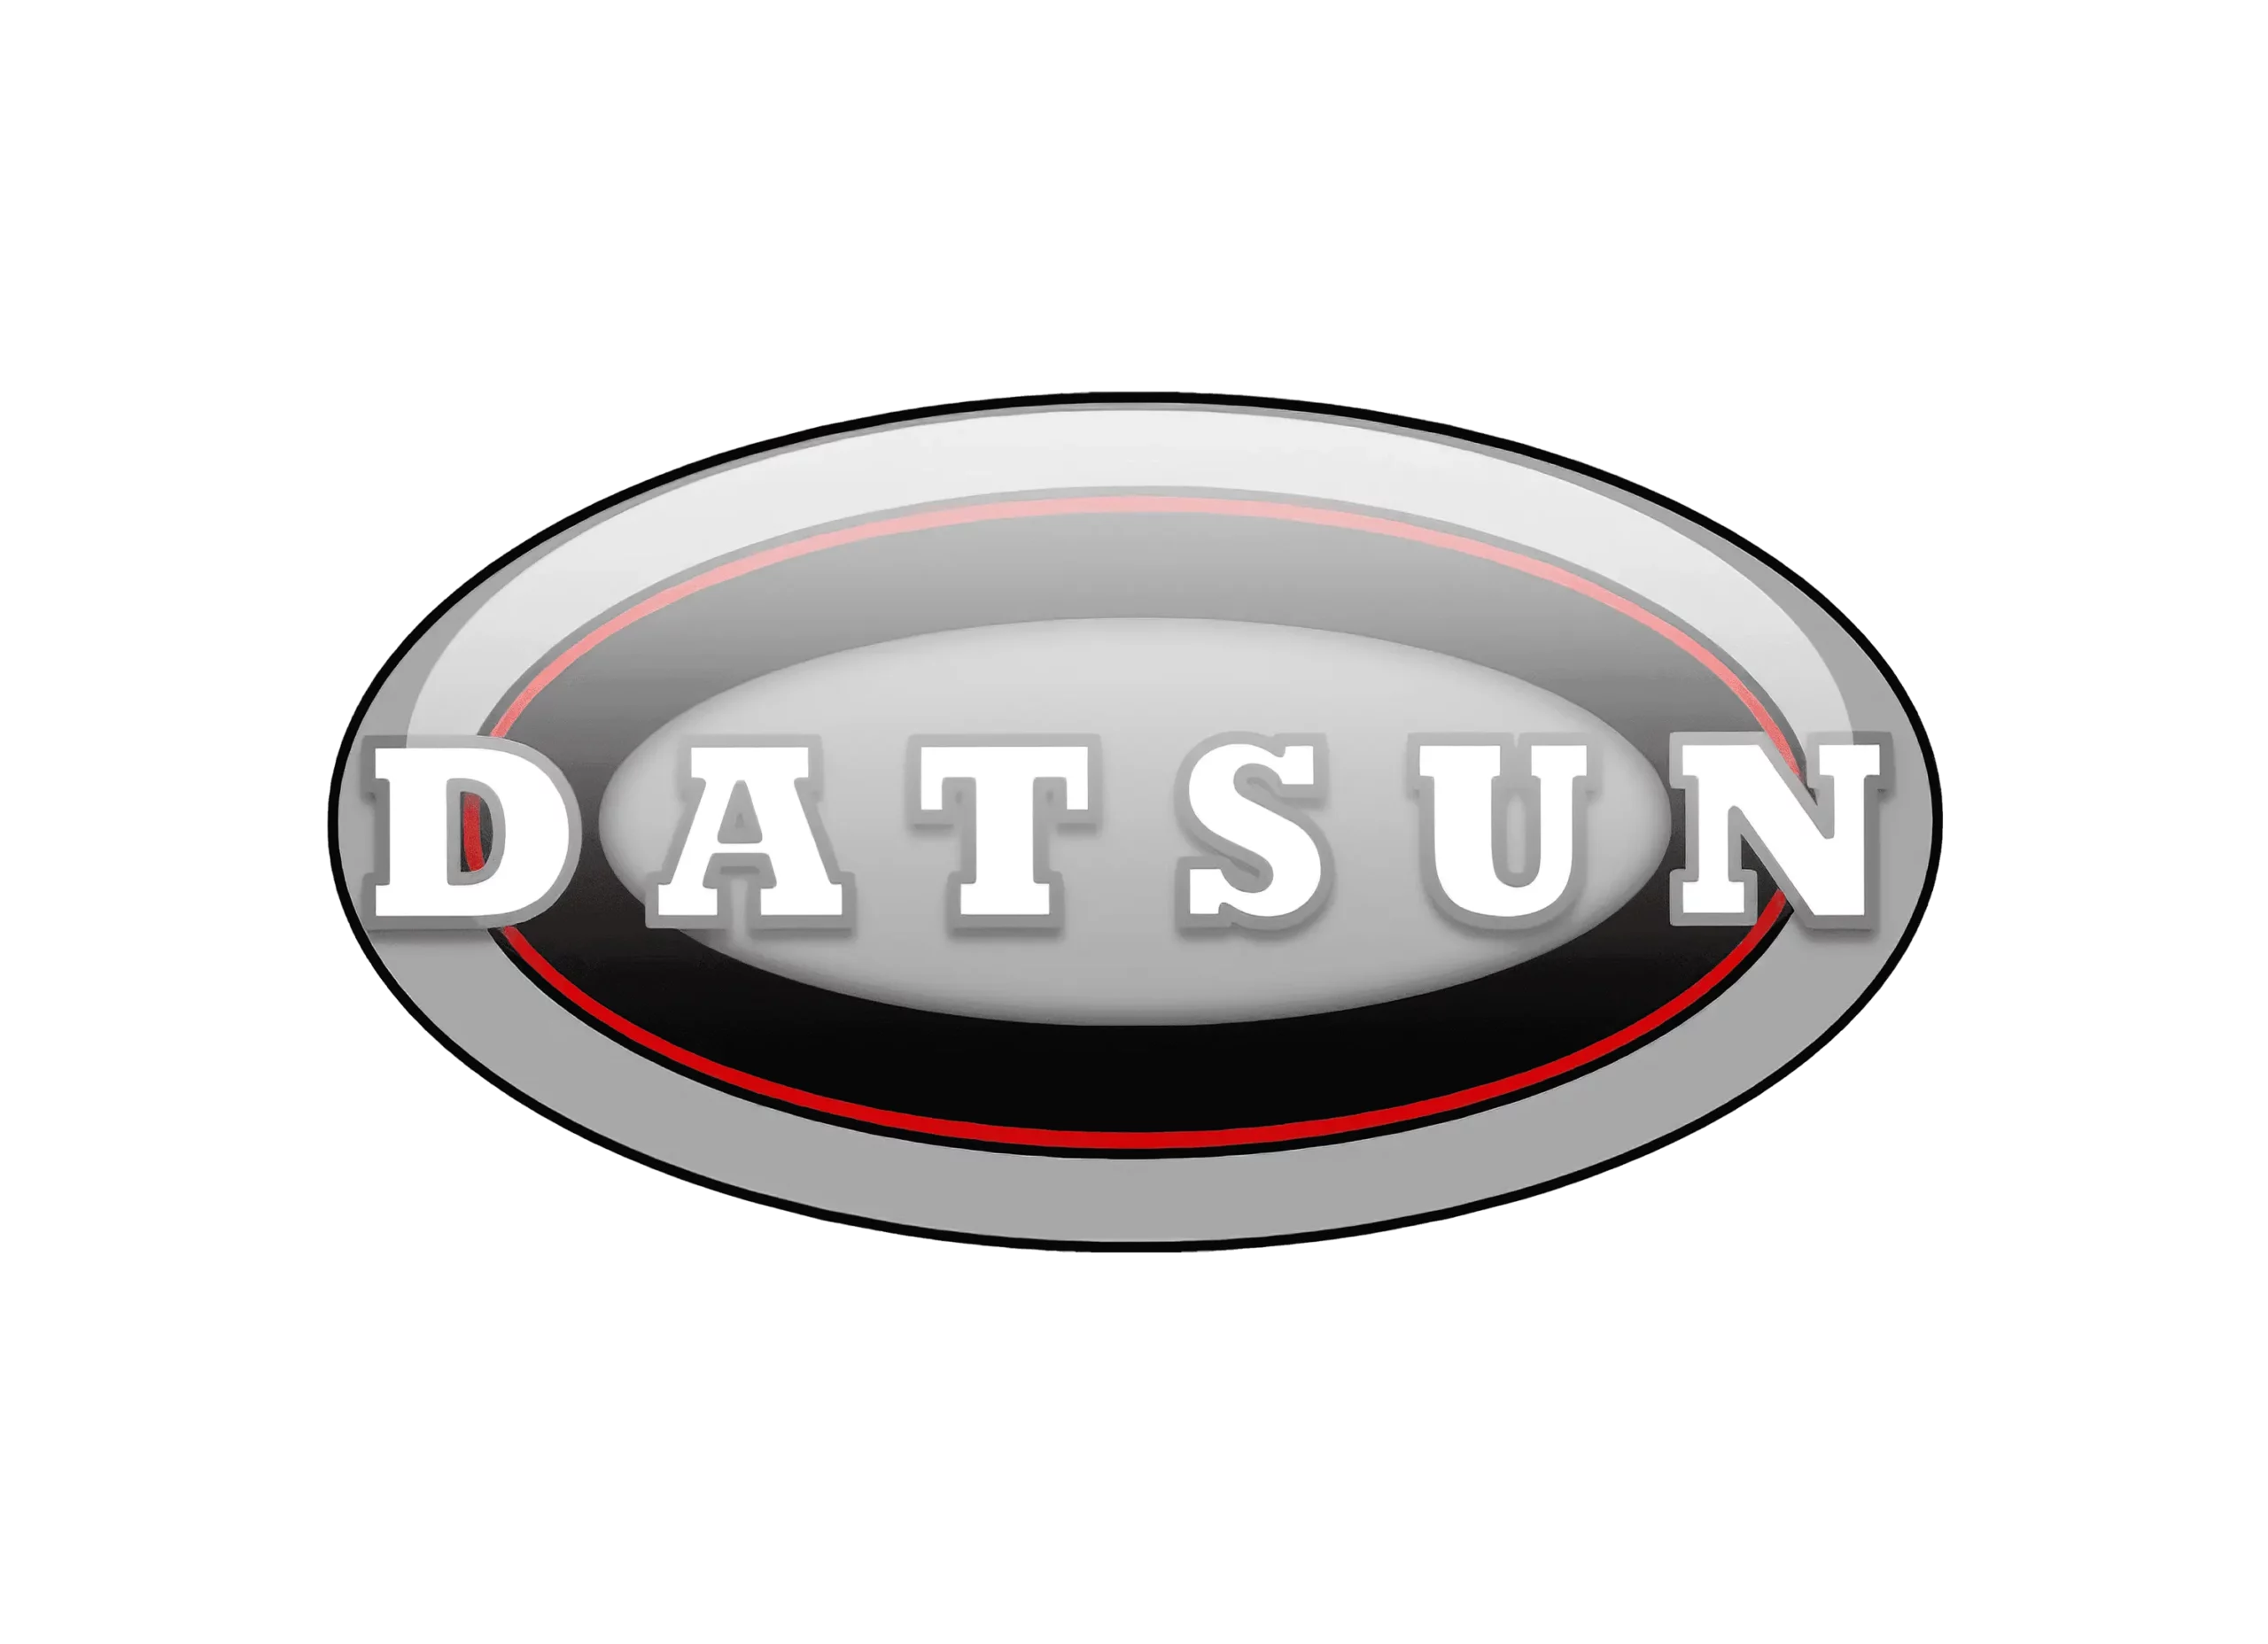 Datsun logo 1970-1972